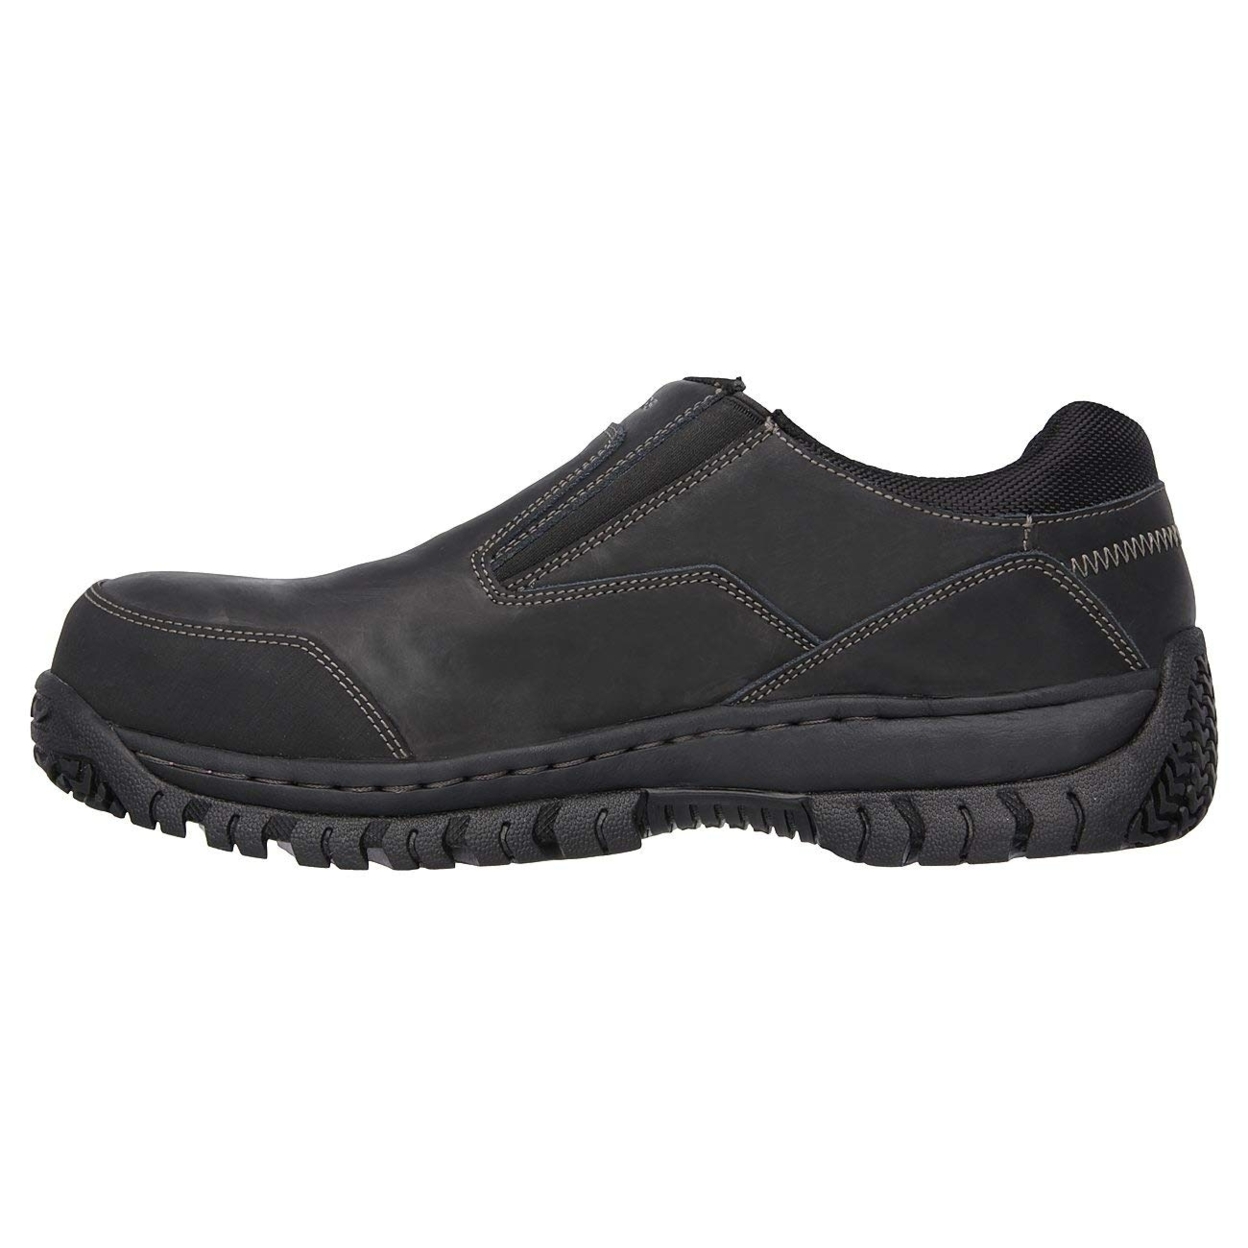 Skechers For Work Men's Hartan Steel Toe Slip-On Shoe Varies BLACK - BLACK, 7.5